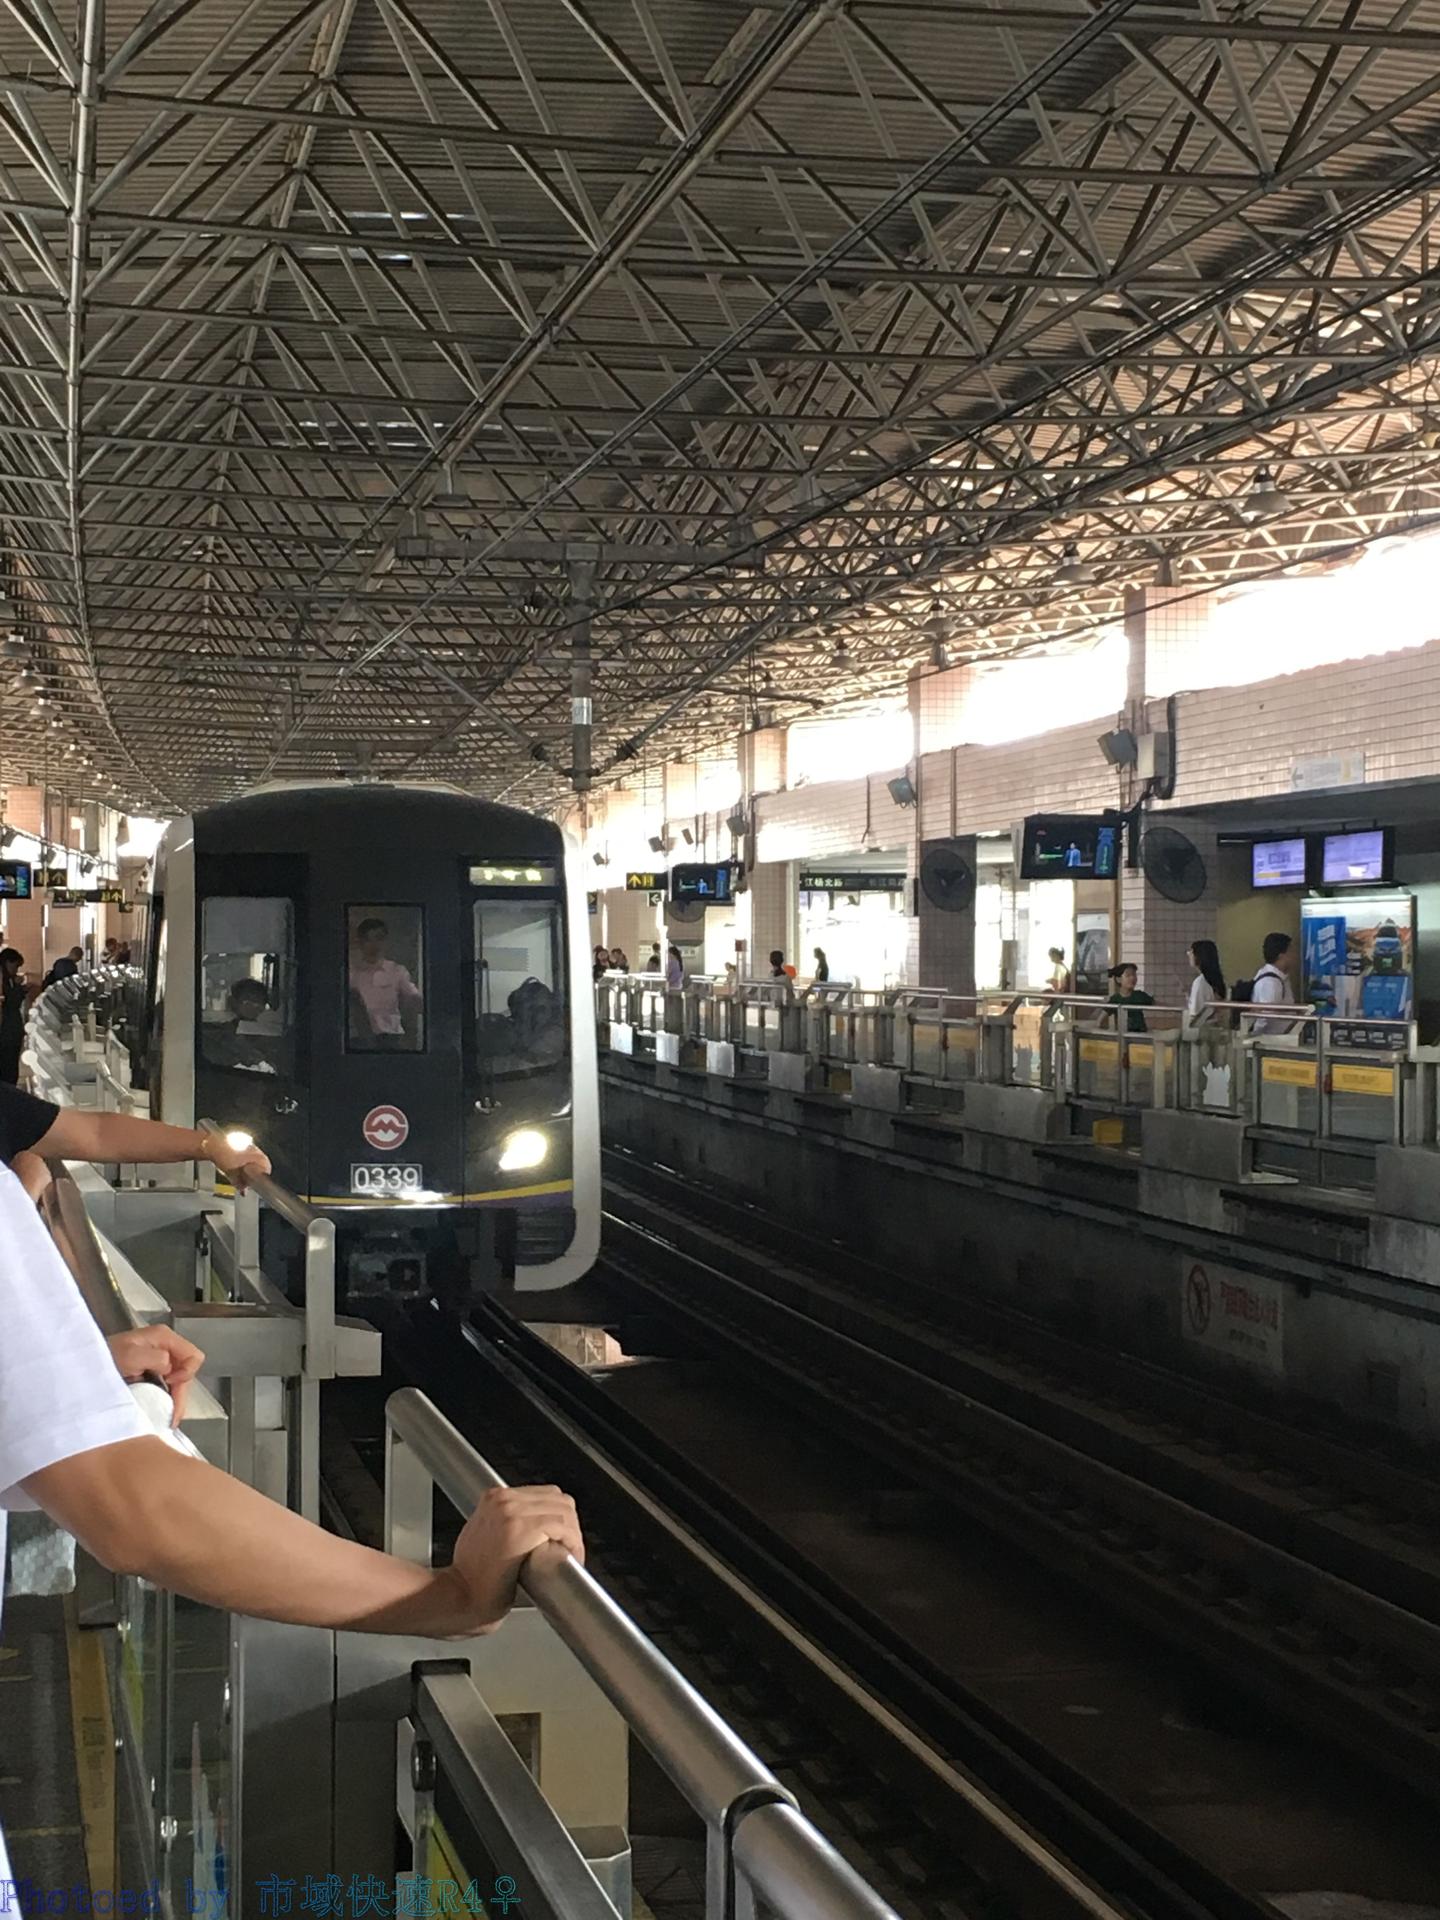 Cities In Metro 上海 在高架的尽头 愿与你驶过相同的轨道for Line 3 三 知乎